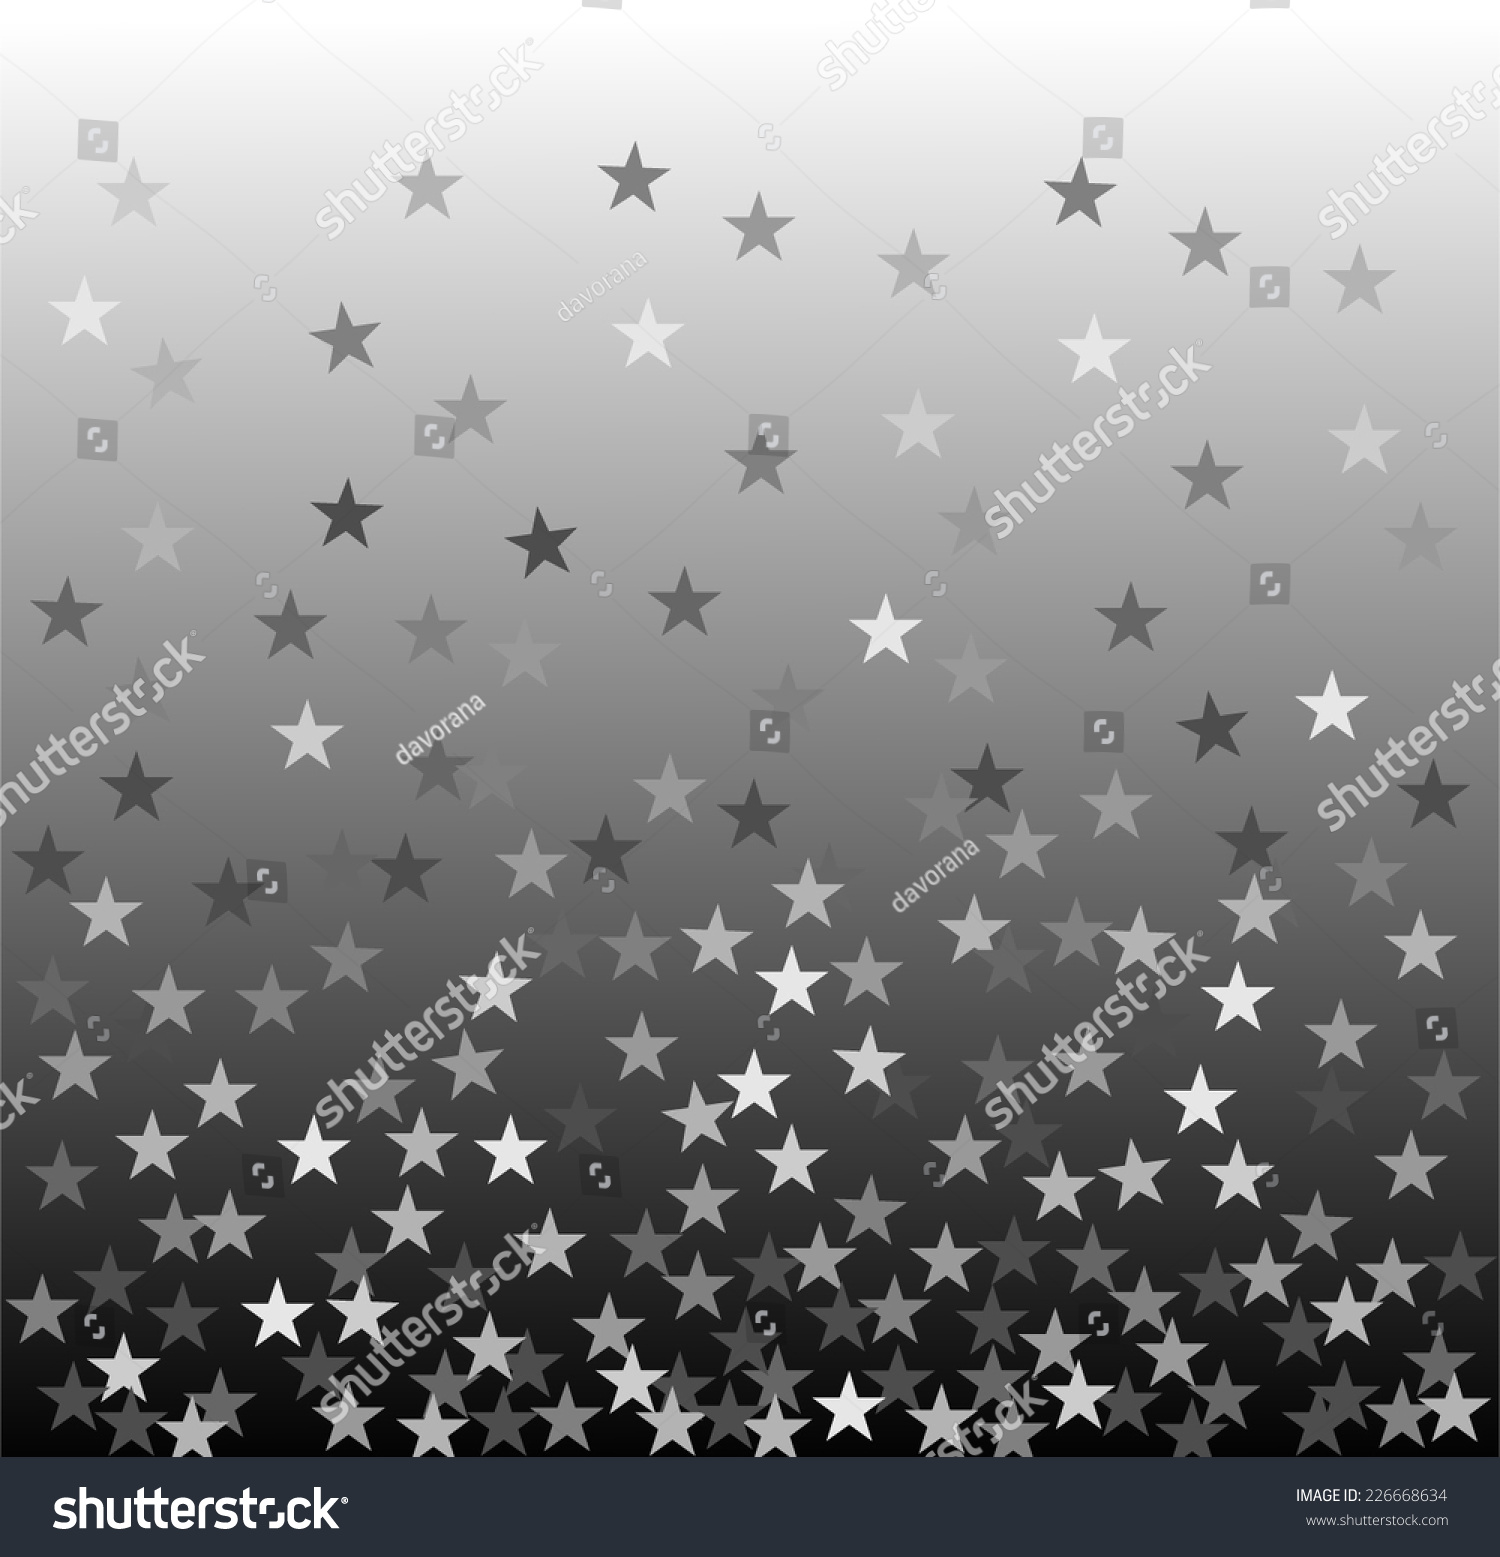 Star Rain Many Small Silver Gray Stock Vector 226668634 - Shutterstock